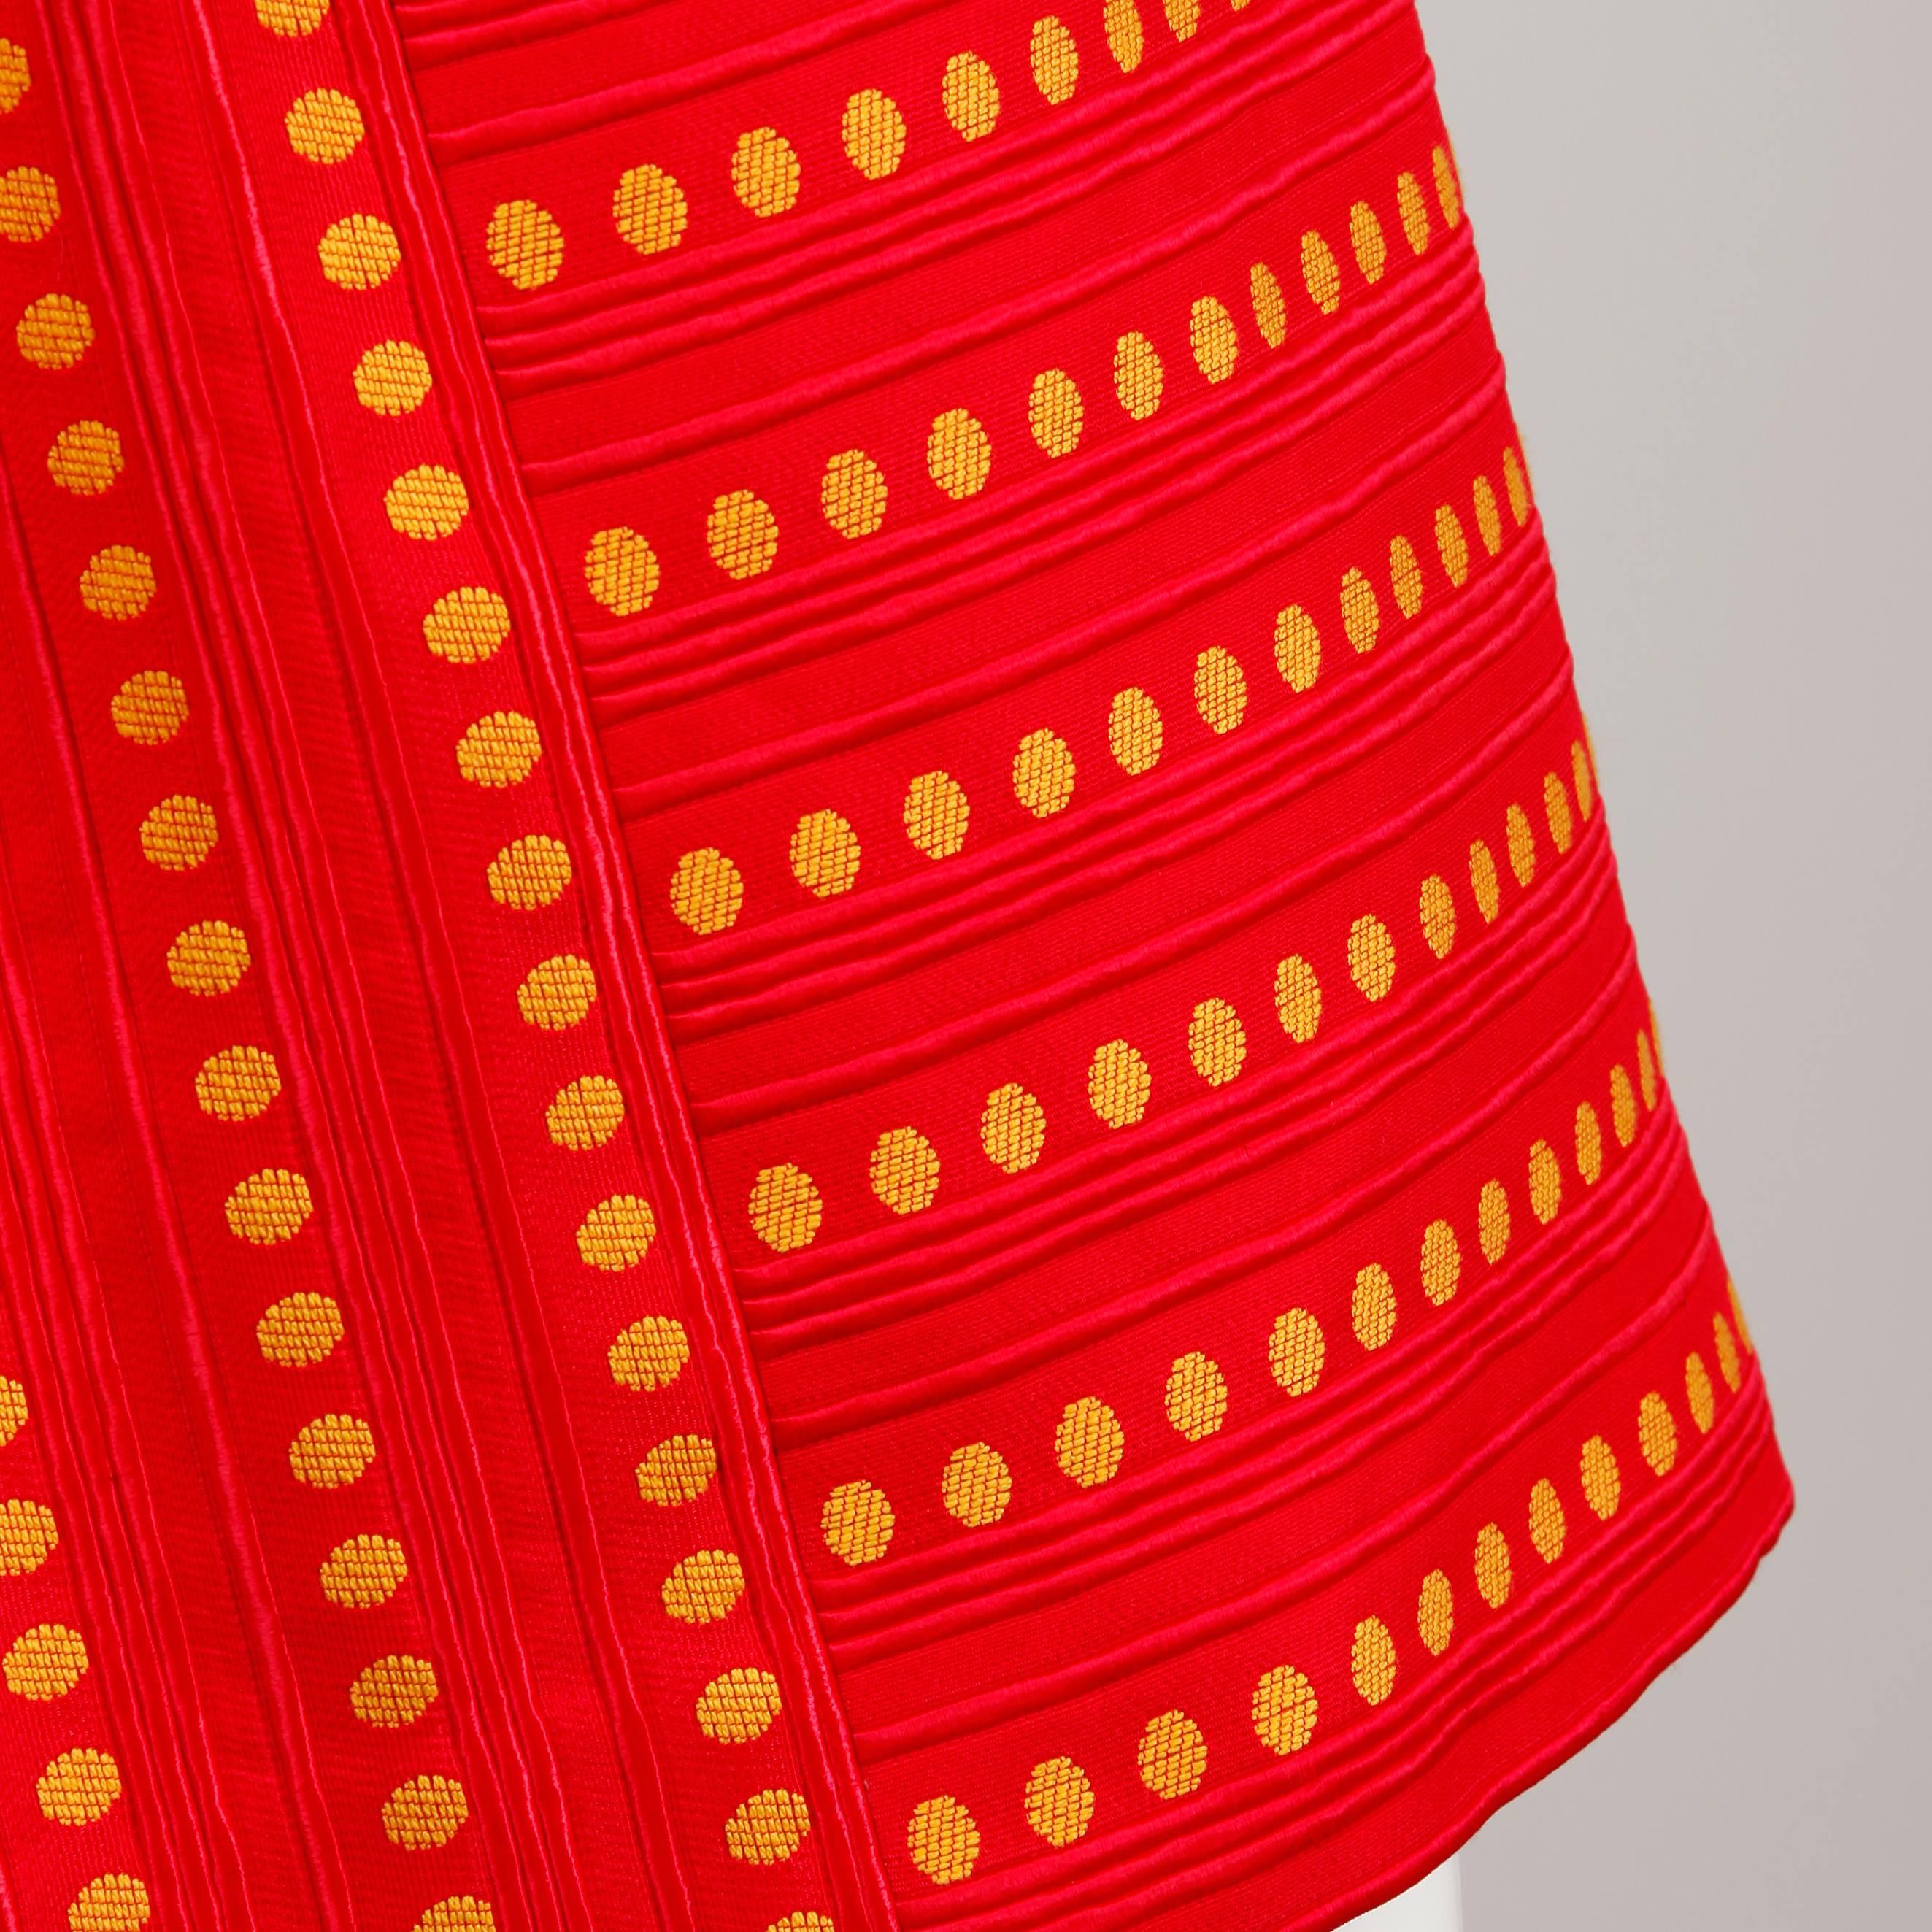 Rare Kreinick 1960s Vintage Red + Yellow Polka Dot Mod Dress + Jacket Ensemble 4